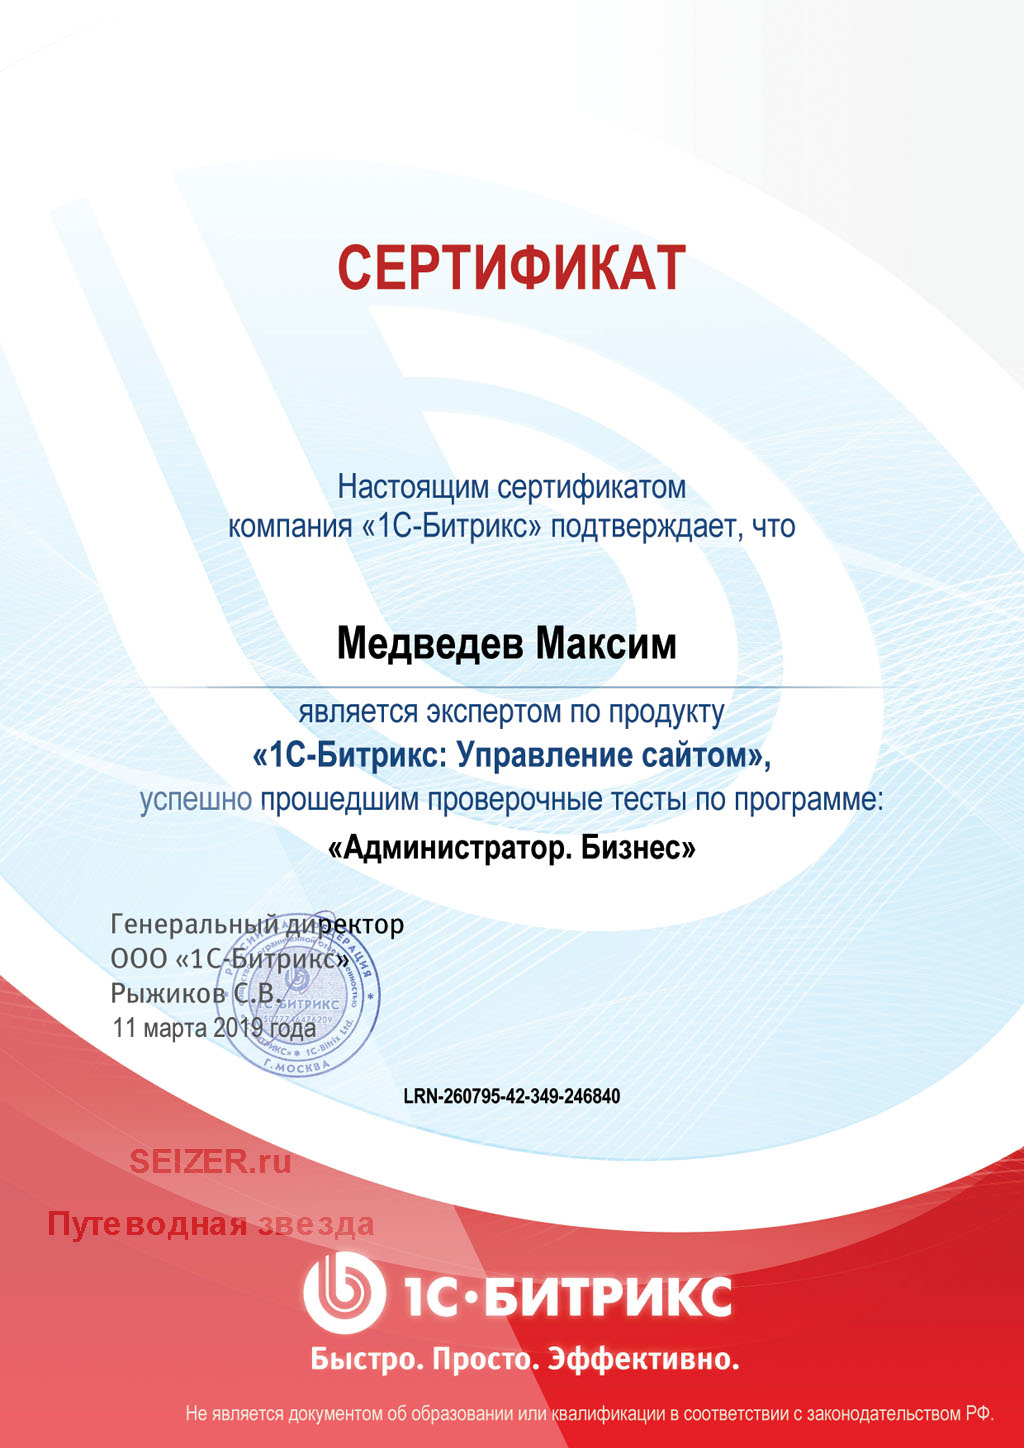 Сертификат 1С Битрикс Администратор Бизнес